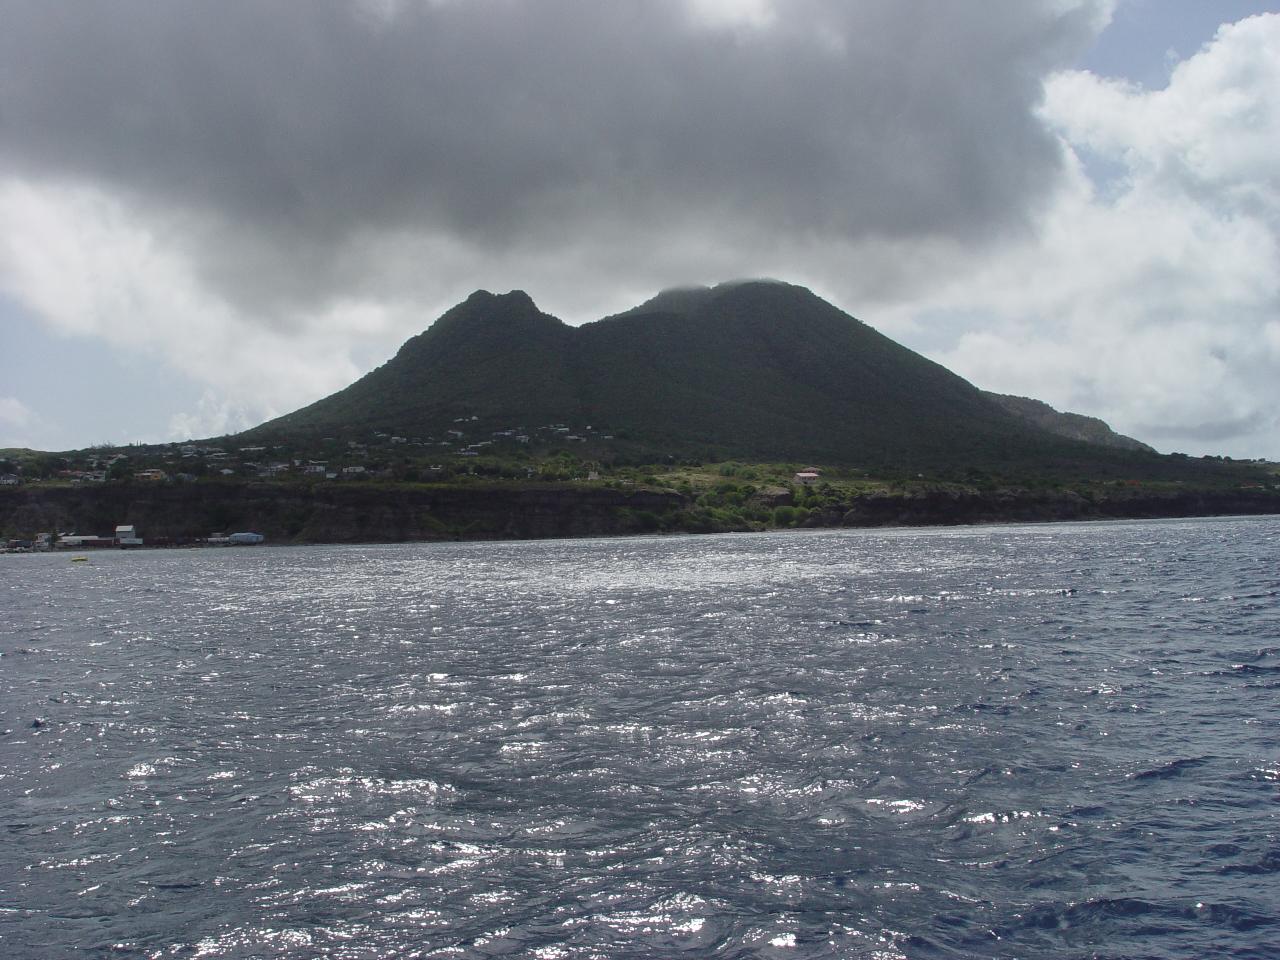 Statia from a boat, St Eustatius